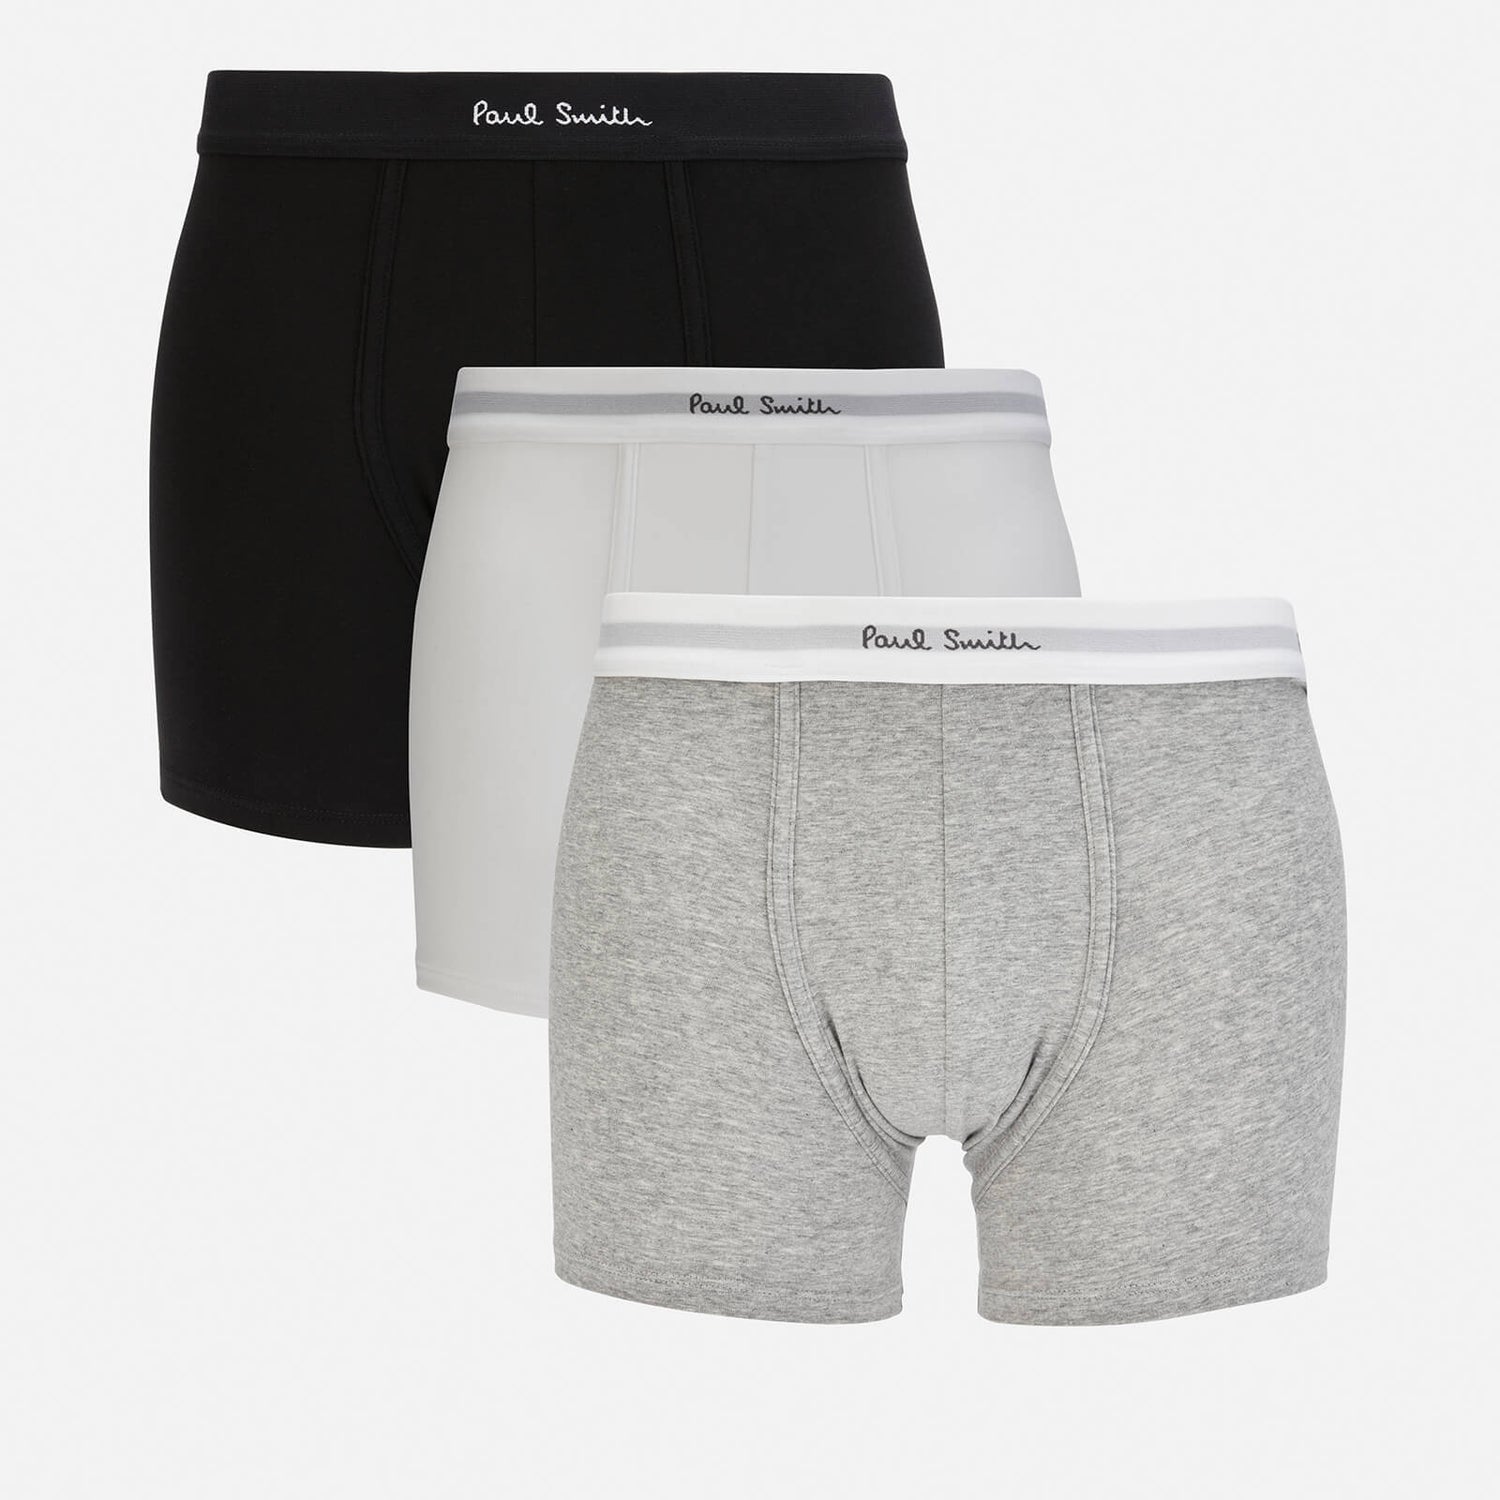 PS Paul Smith Men's 3-Pack Boxer Briefs - Black/Grey/White | TheHut.com